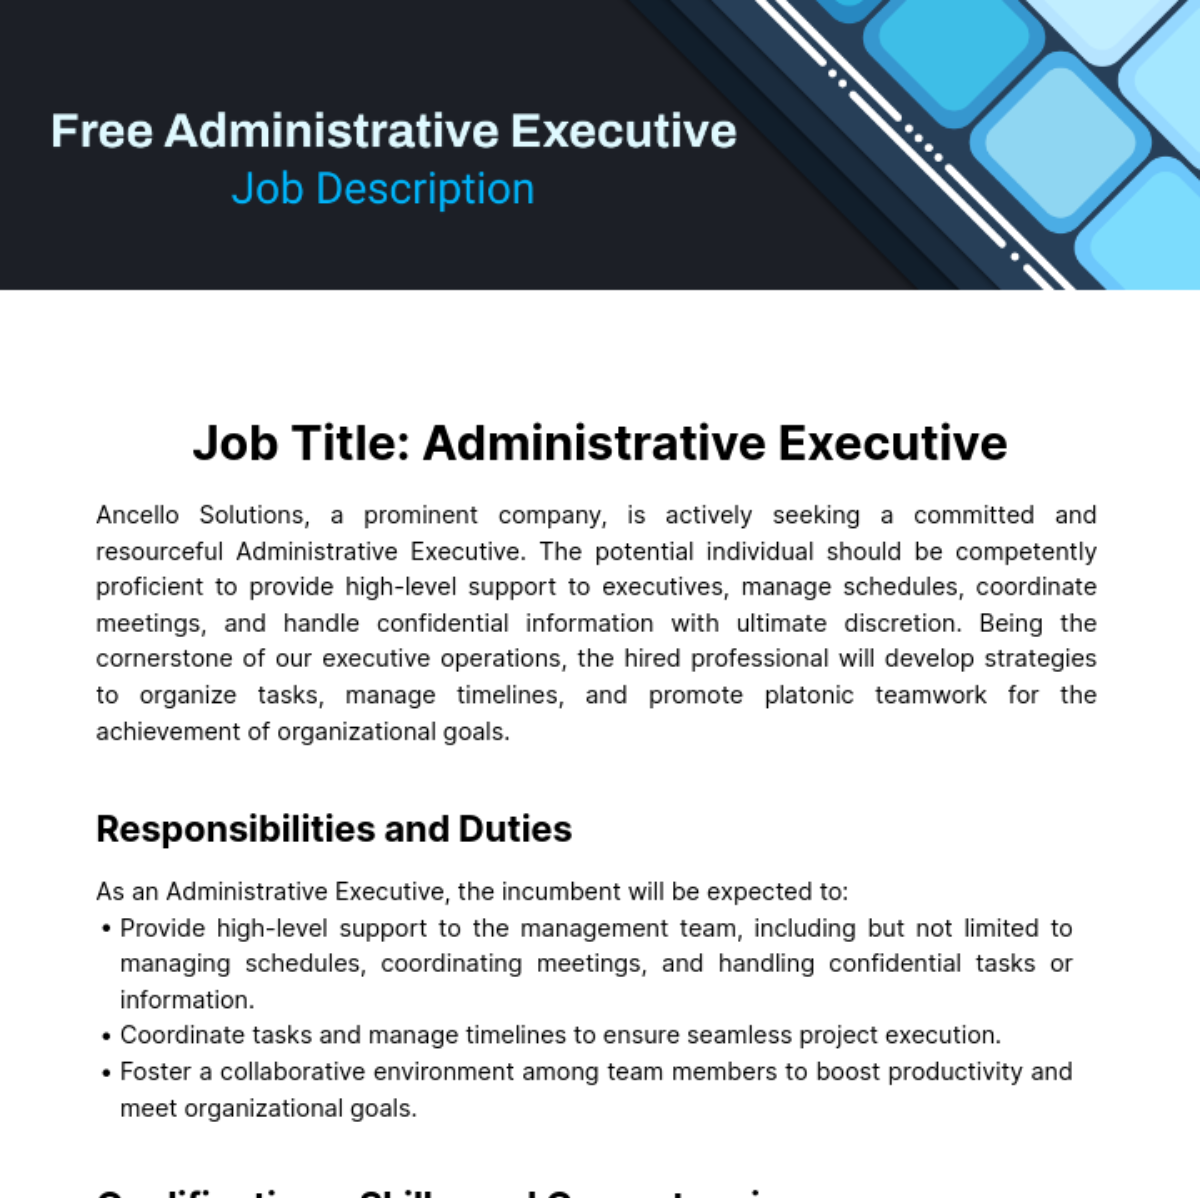 Free Administrative Executive Job Description Template